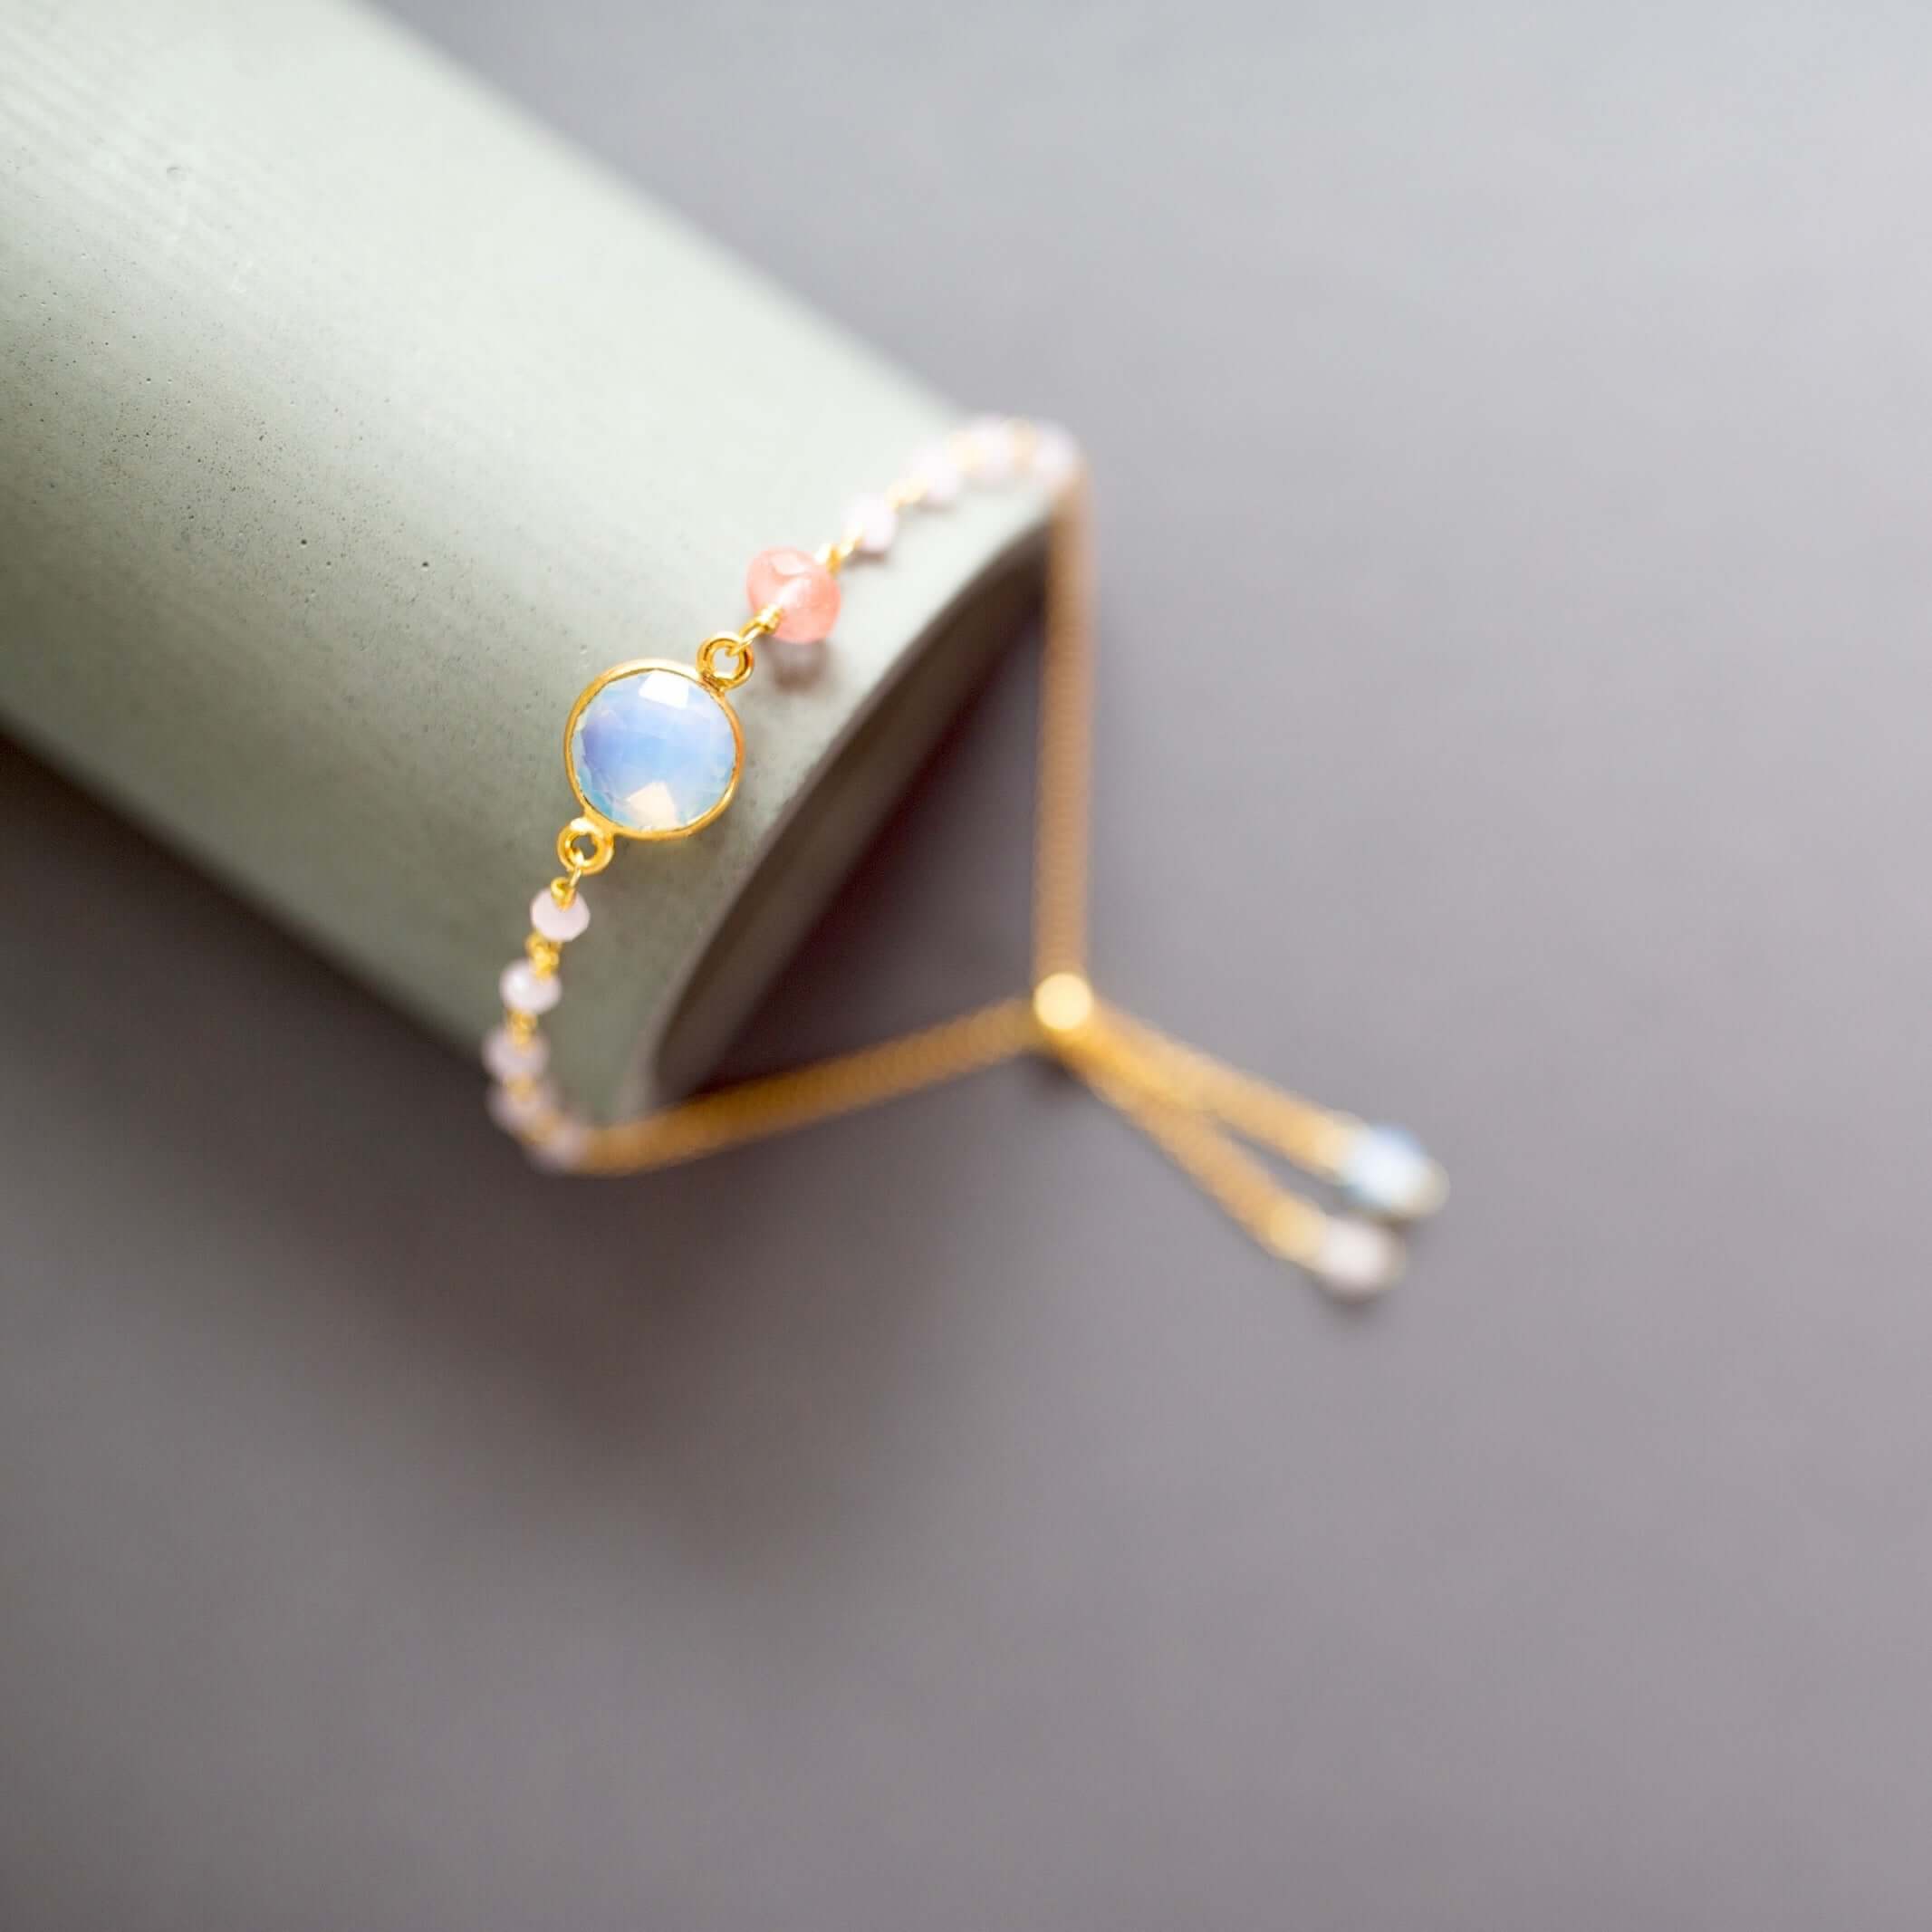 Opal quartz and rose quartz stone Gold plated bracelet with adjustable slider clasp